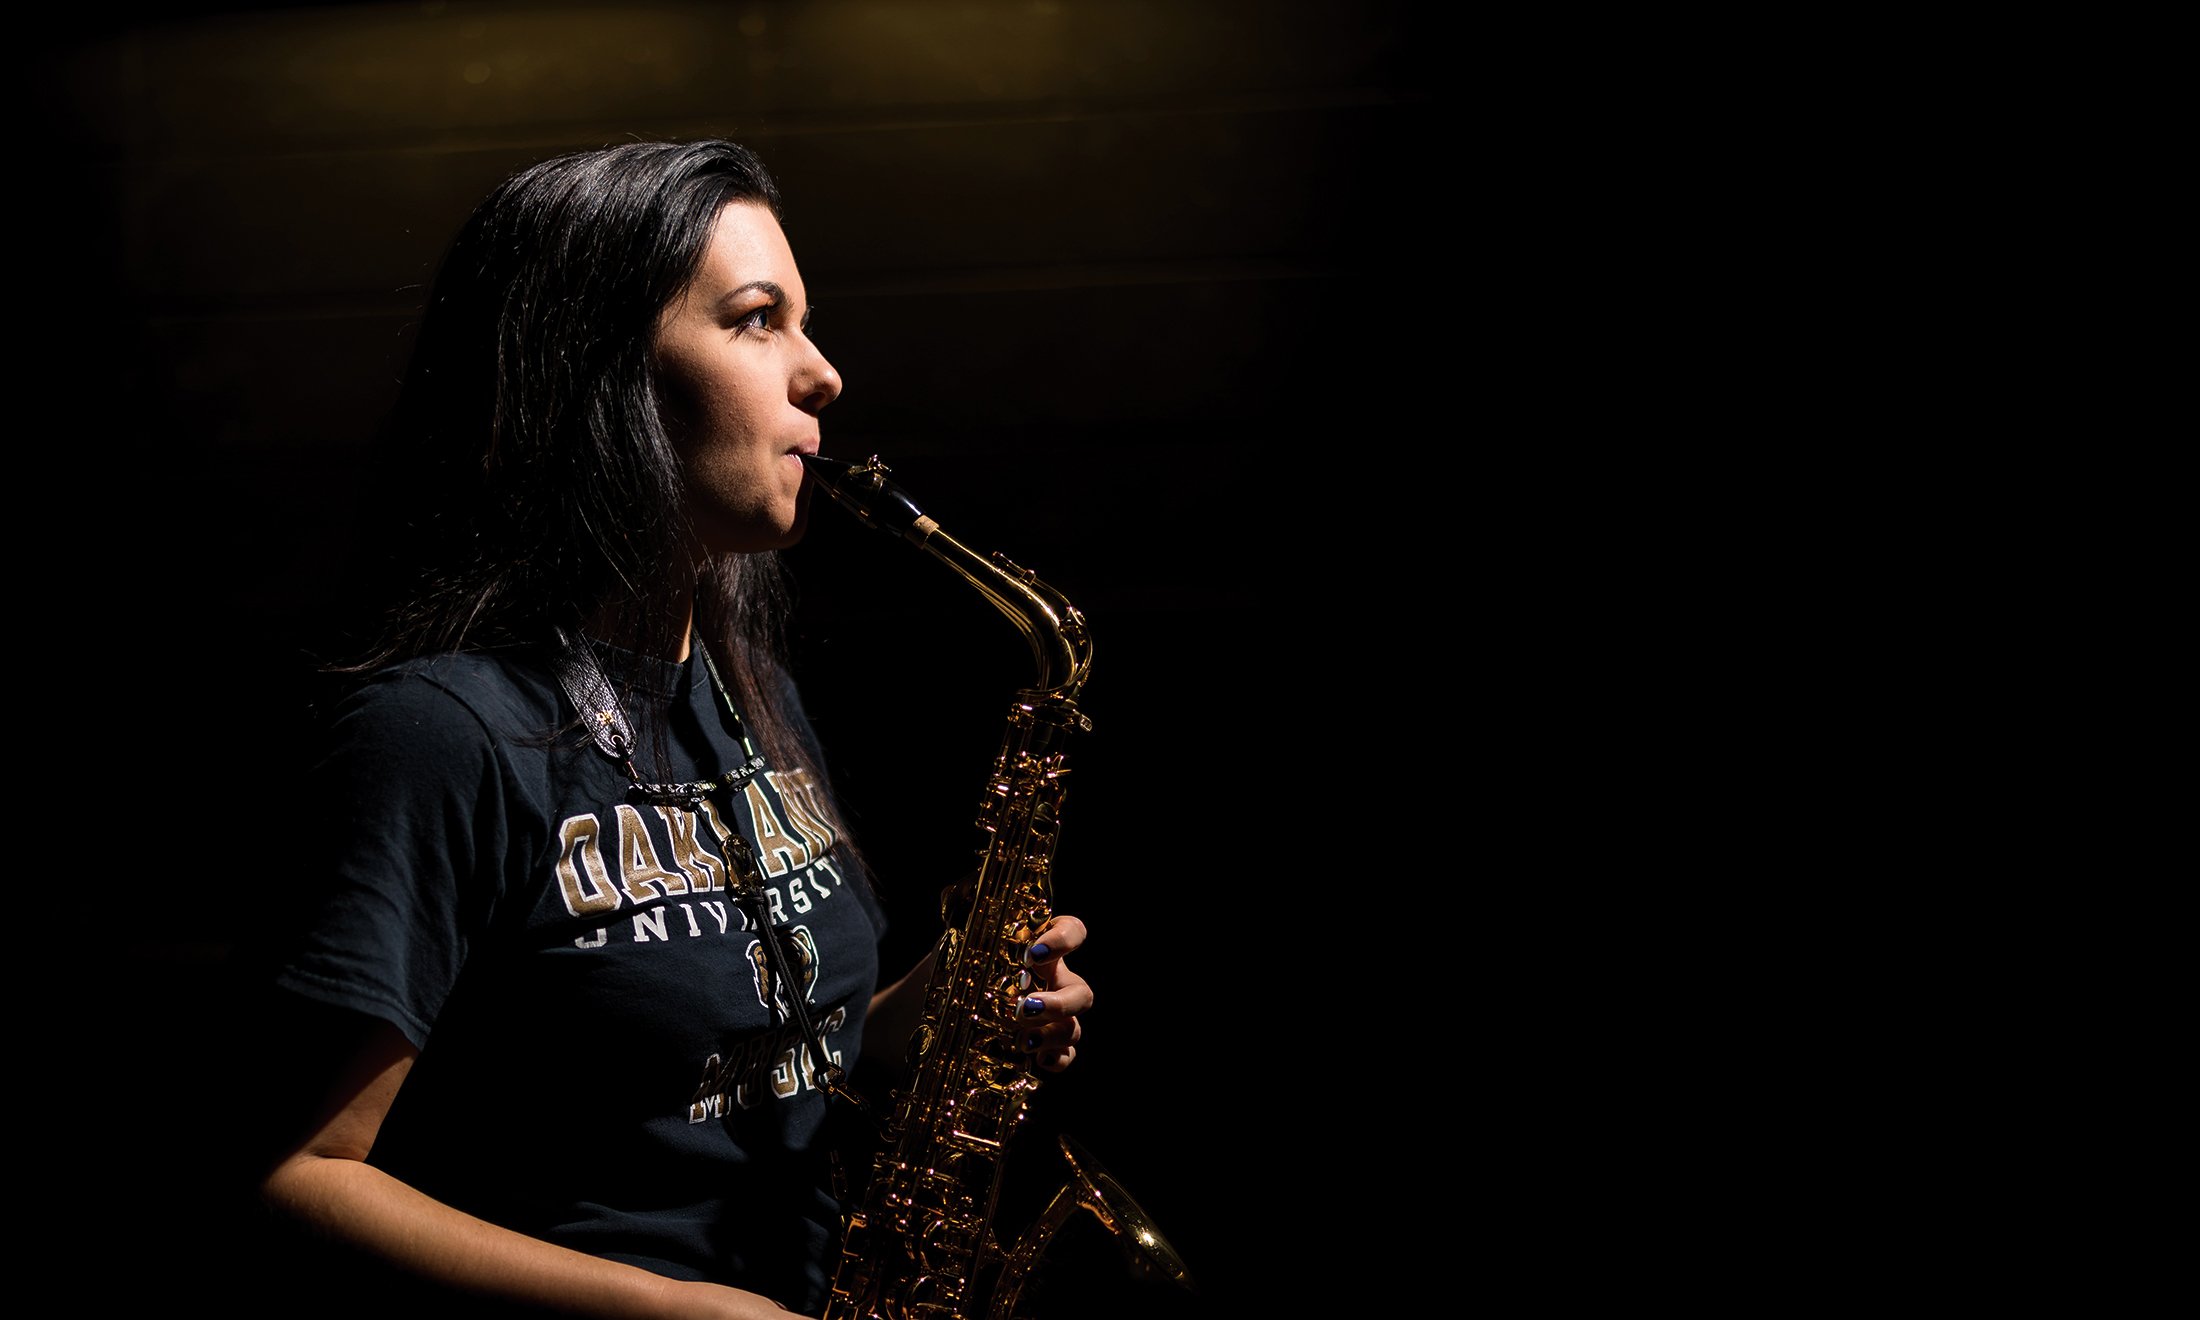 A woman playing a saxophone.